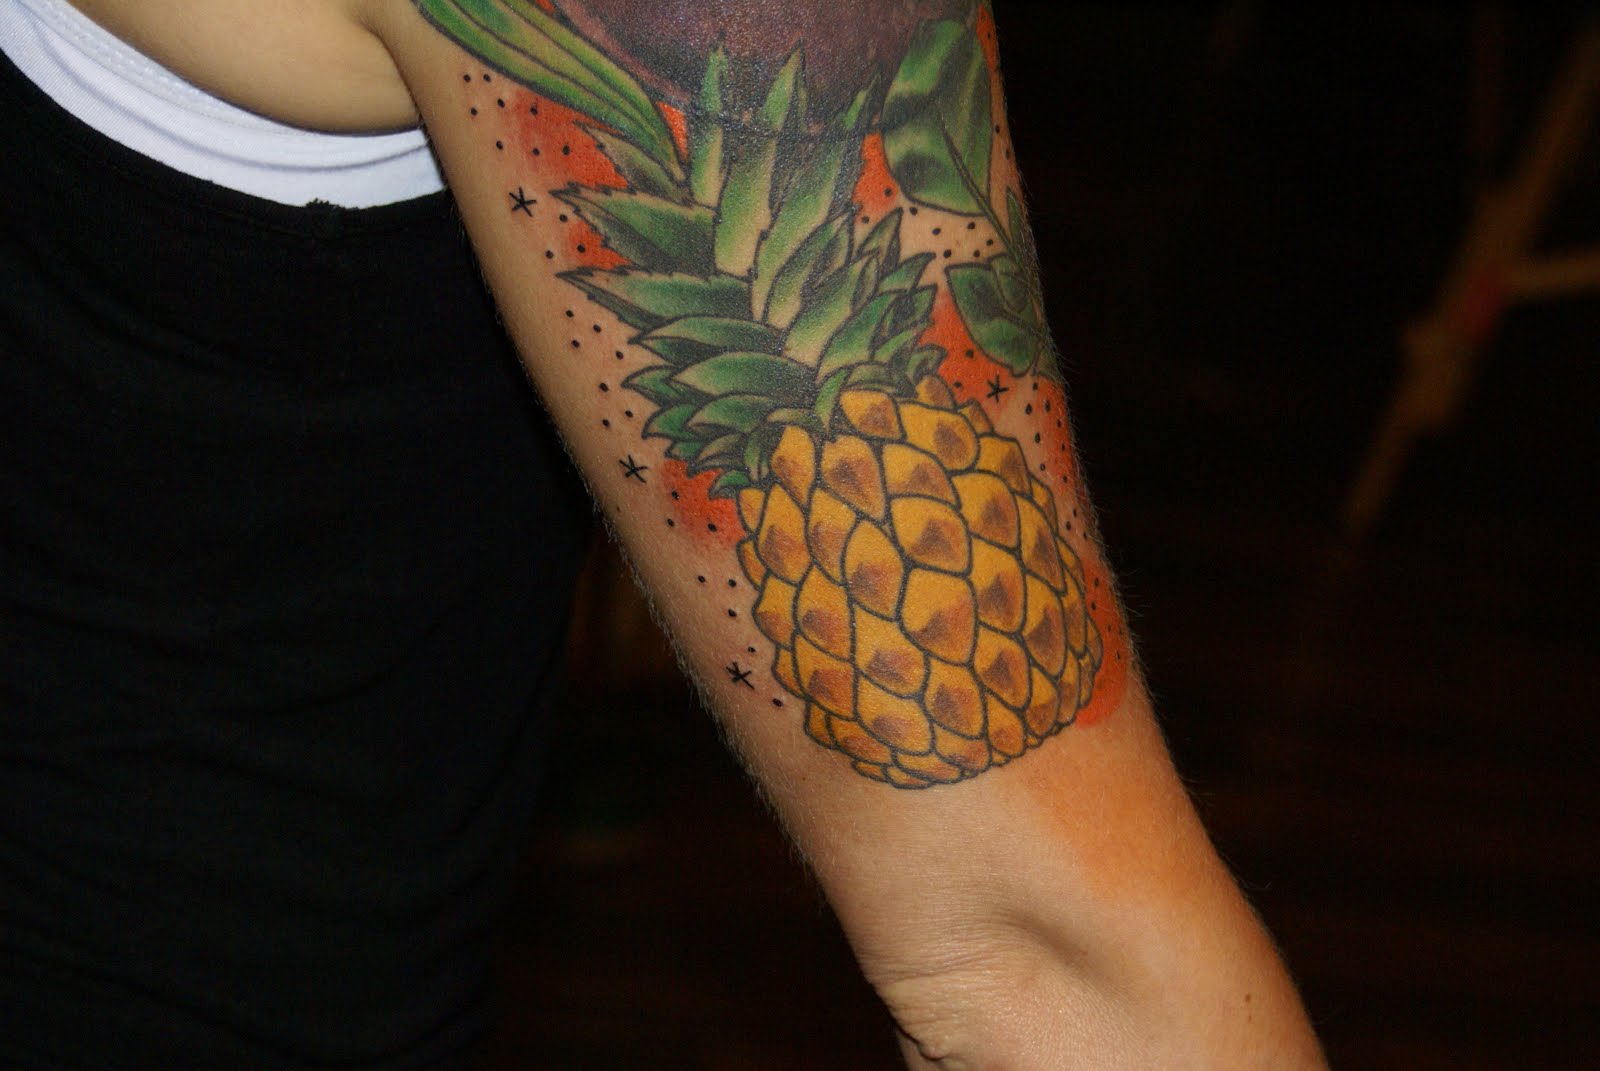 Traditional Pineapple Tattoo